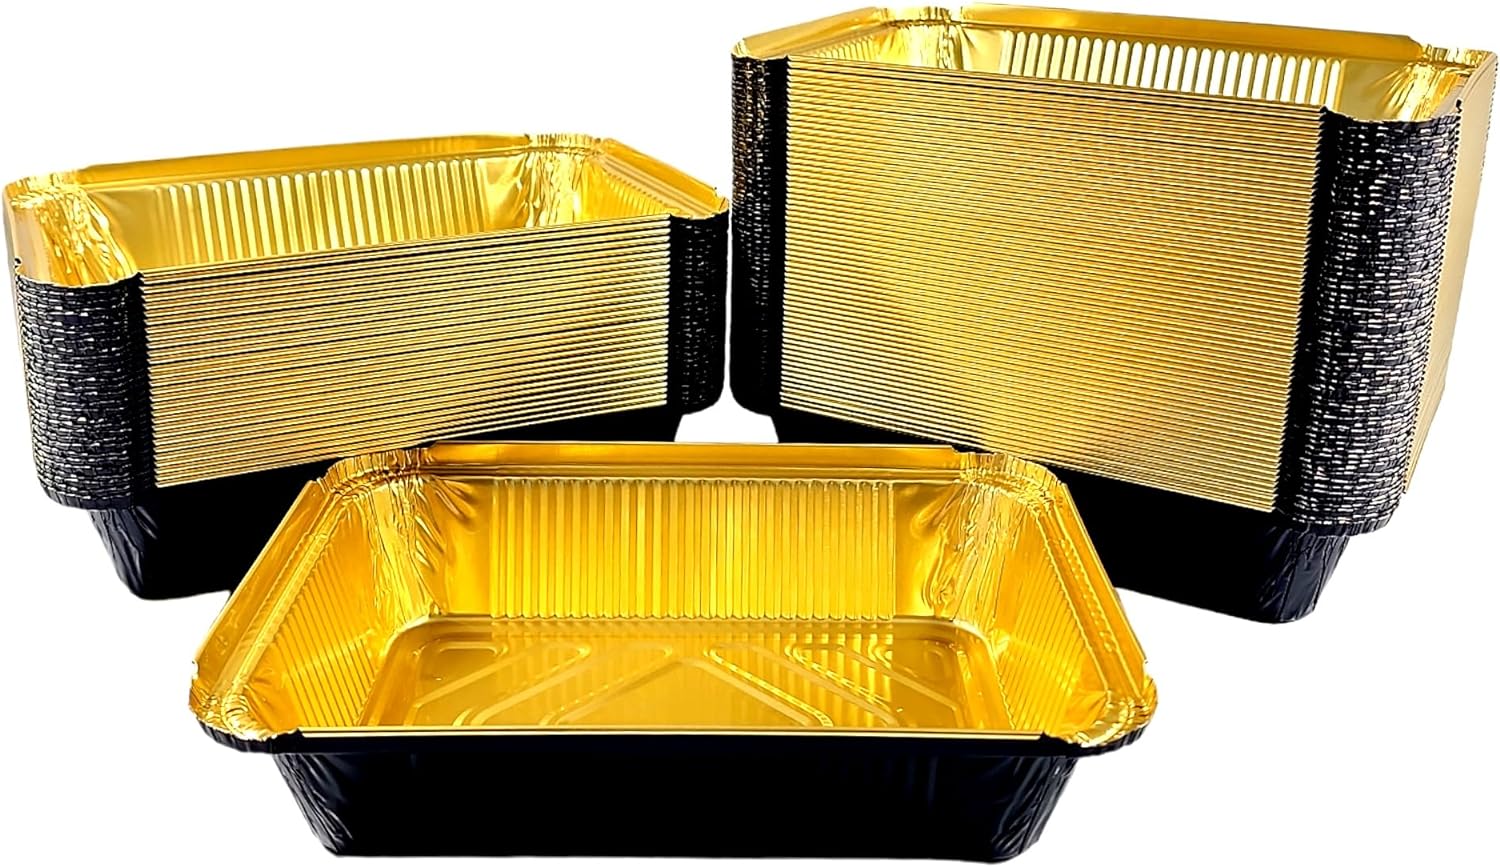 2 1/4 lb. Oblong Black & Gold Aluminum Foil Pans Take Out Heavy Duty Containers W/Clear Dome Lids 50/PK